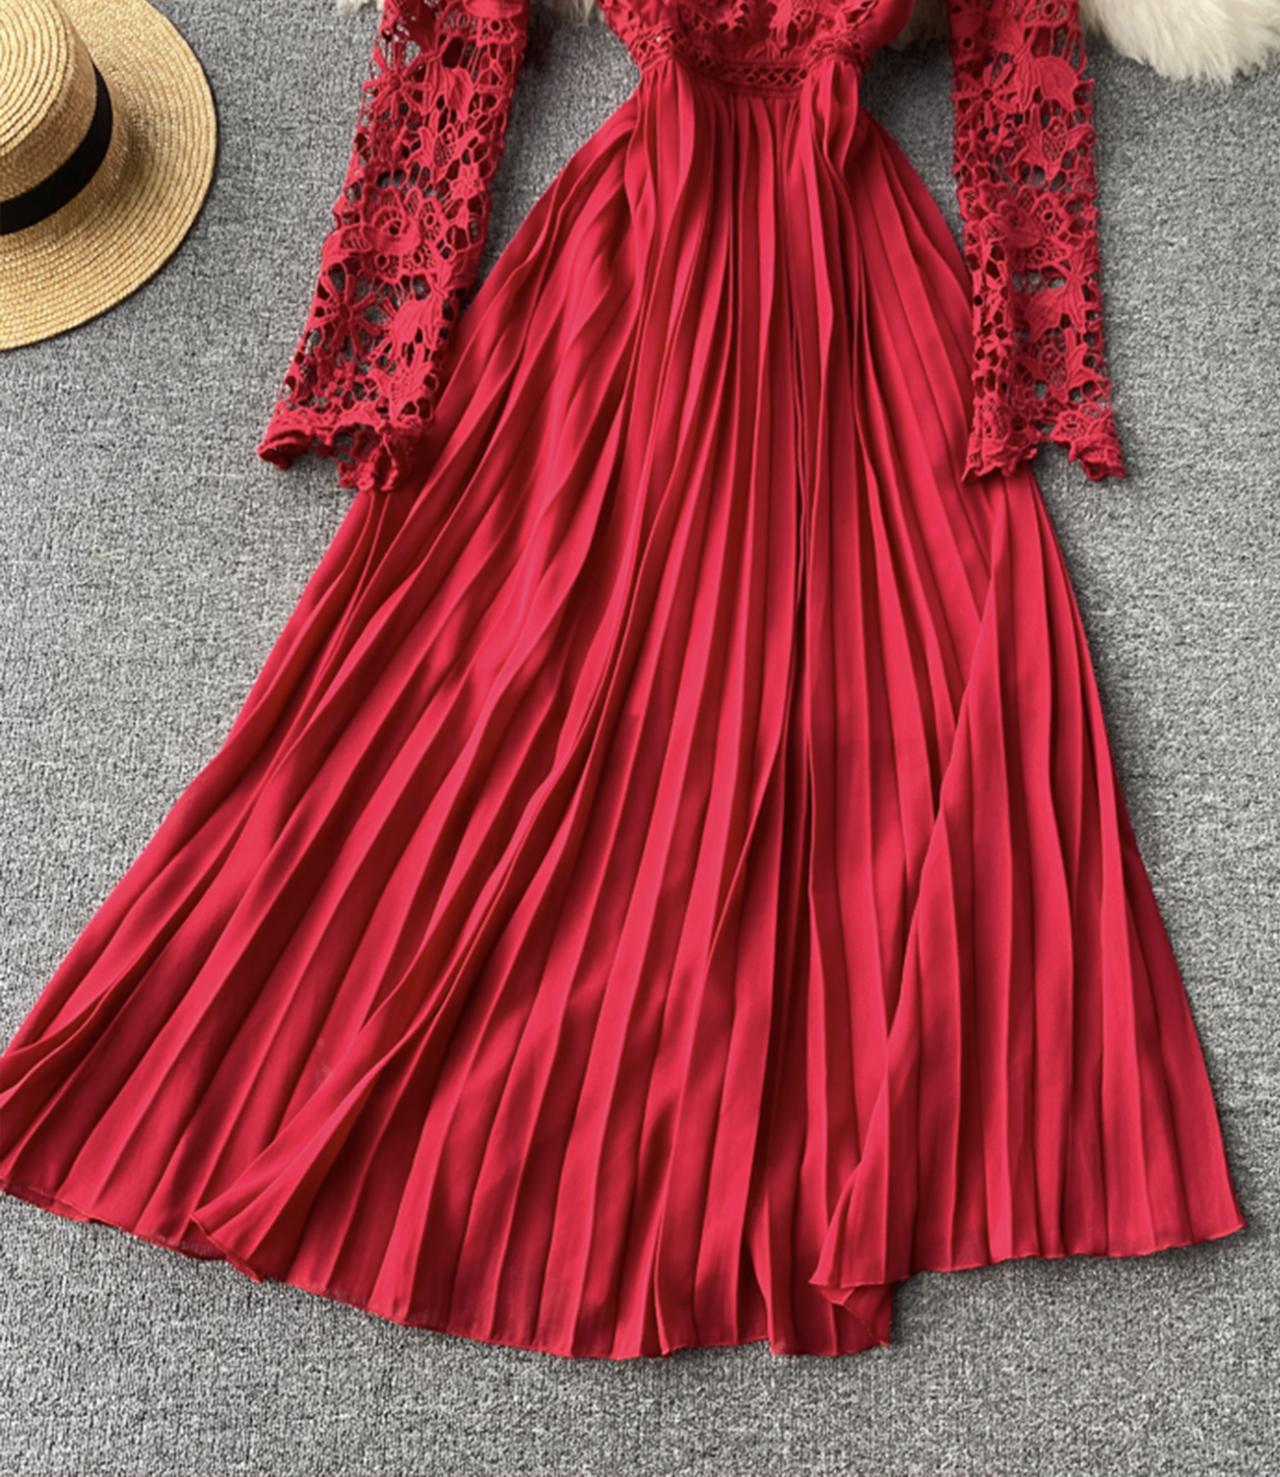 Stylish long sleeve lace dress  768